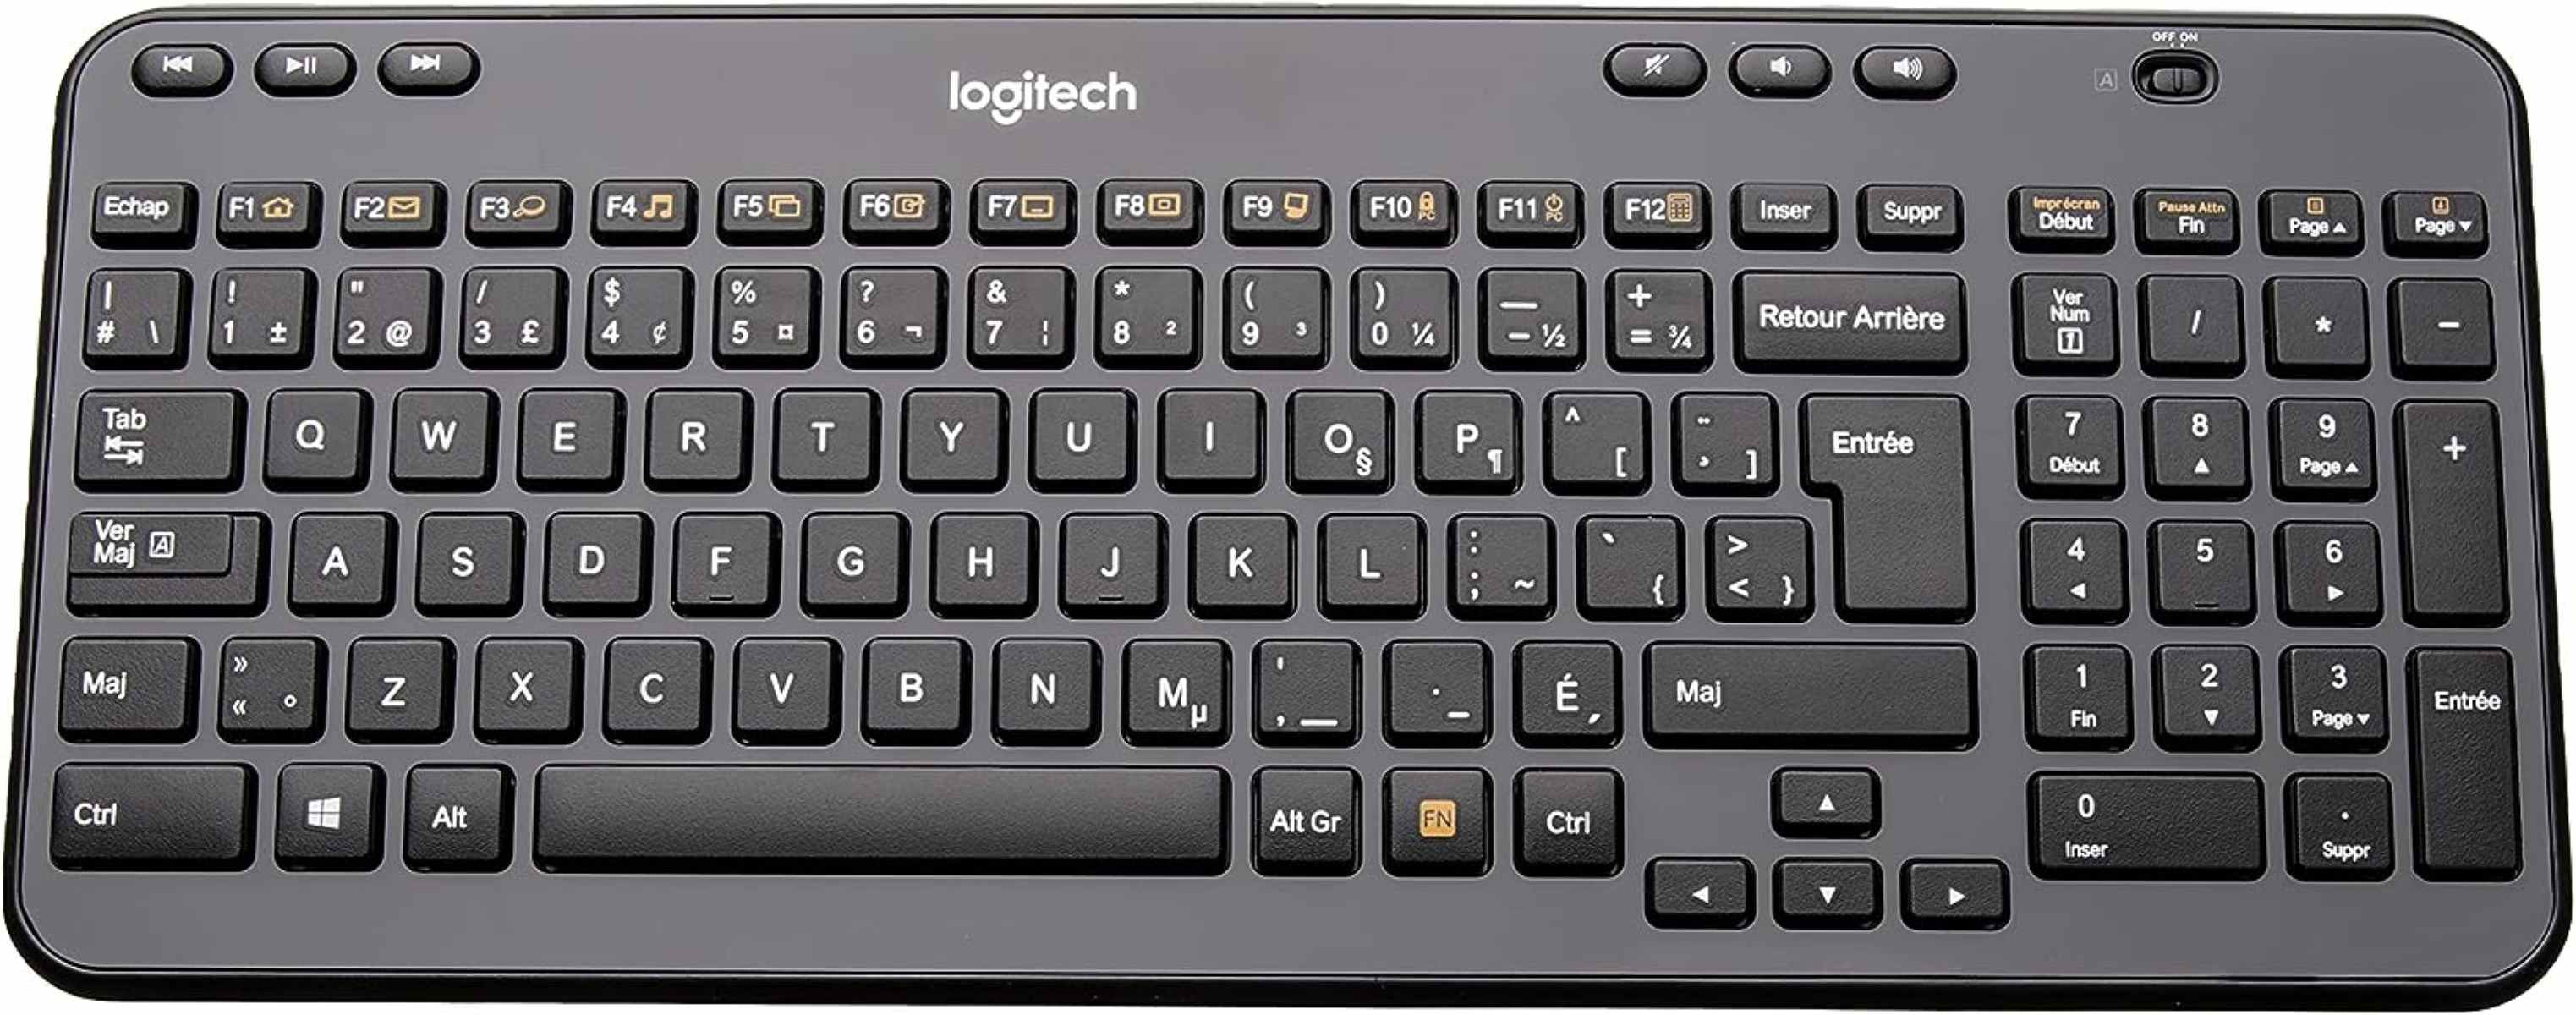 How Do I Connect My Logitech Wireless Keyboard